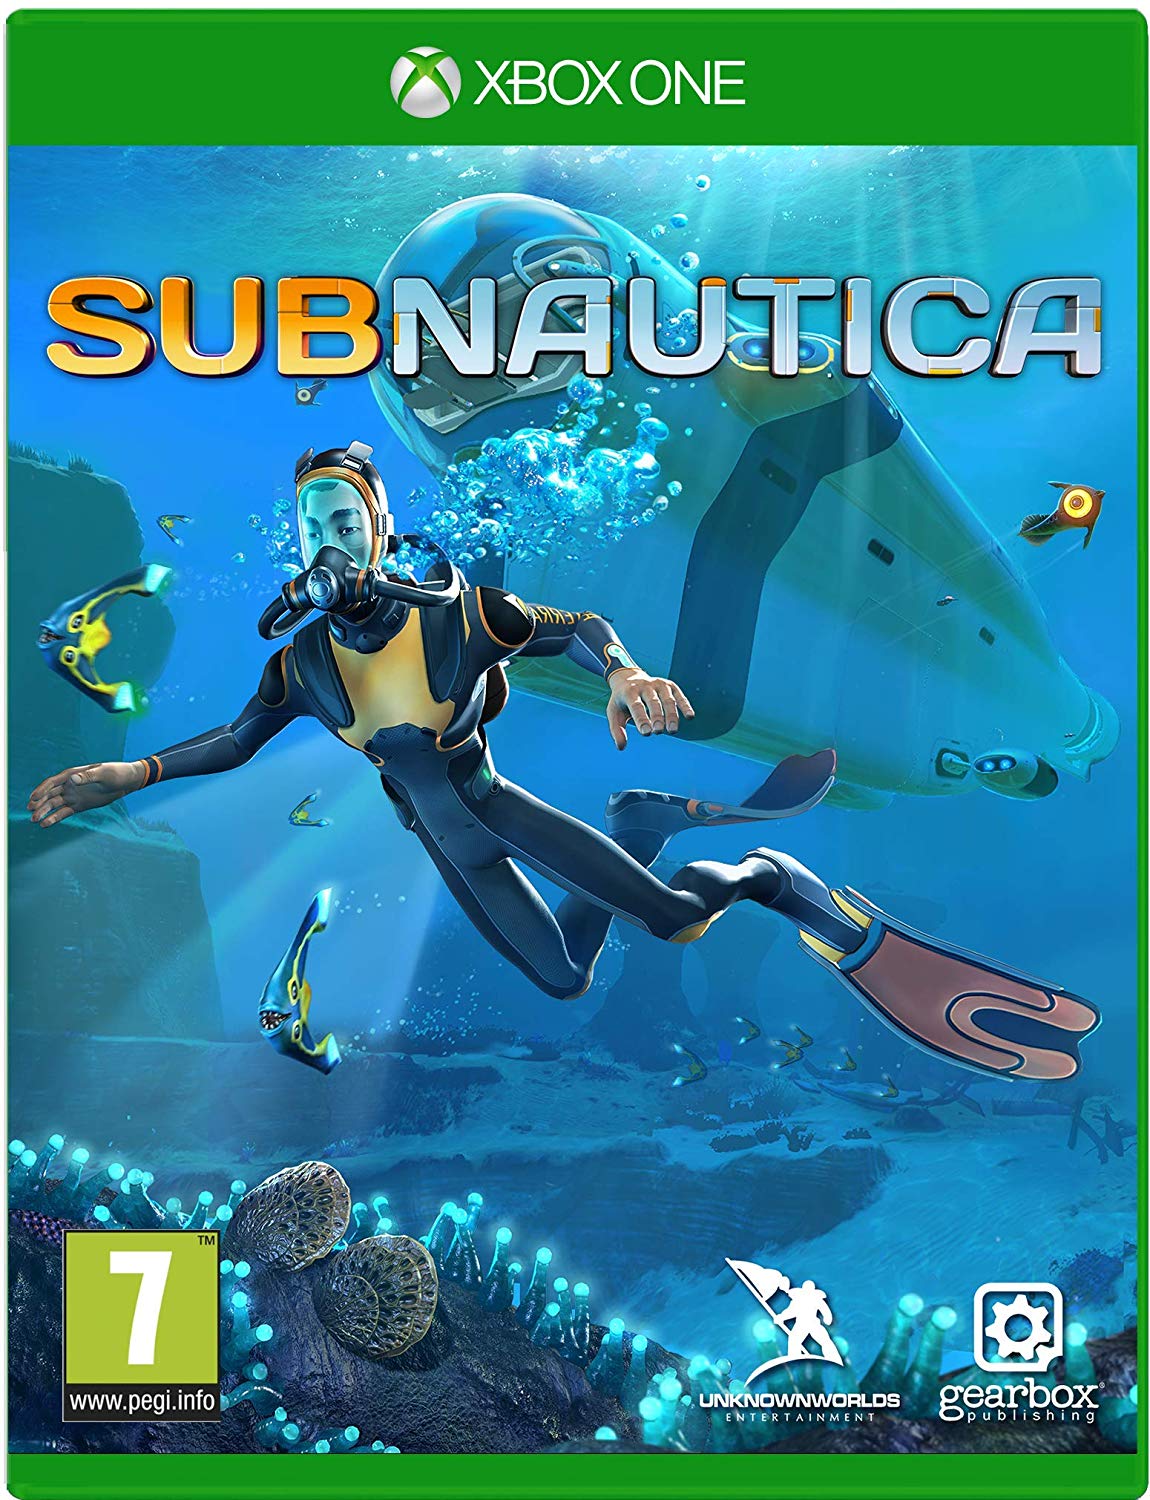 Subnautica VPN ACTIVATED Digital Download Key (Xbox One)